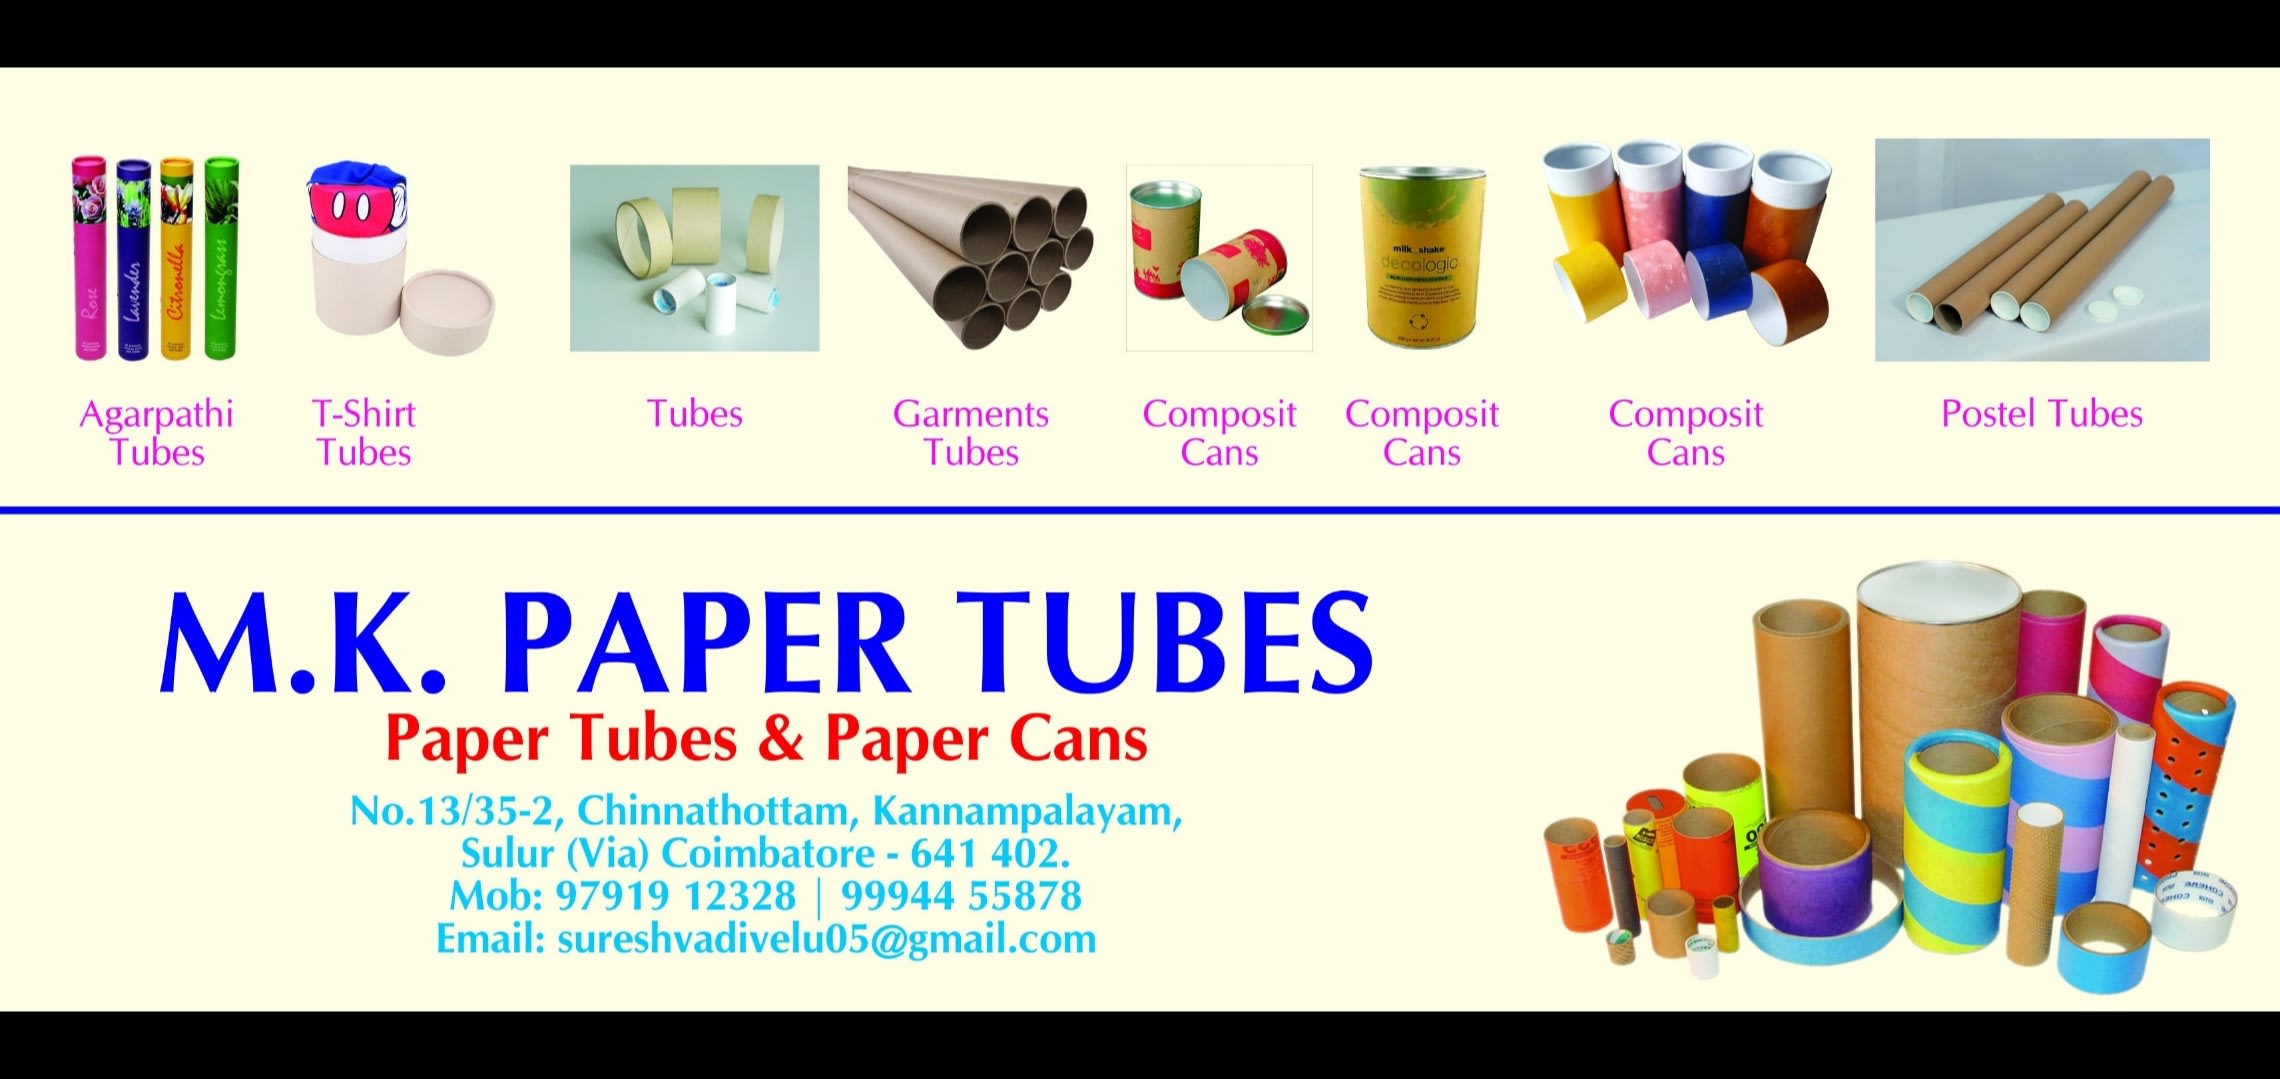 M. K. Paper Tubes